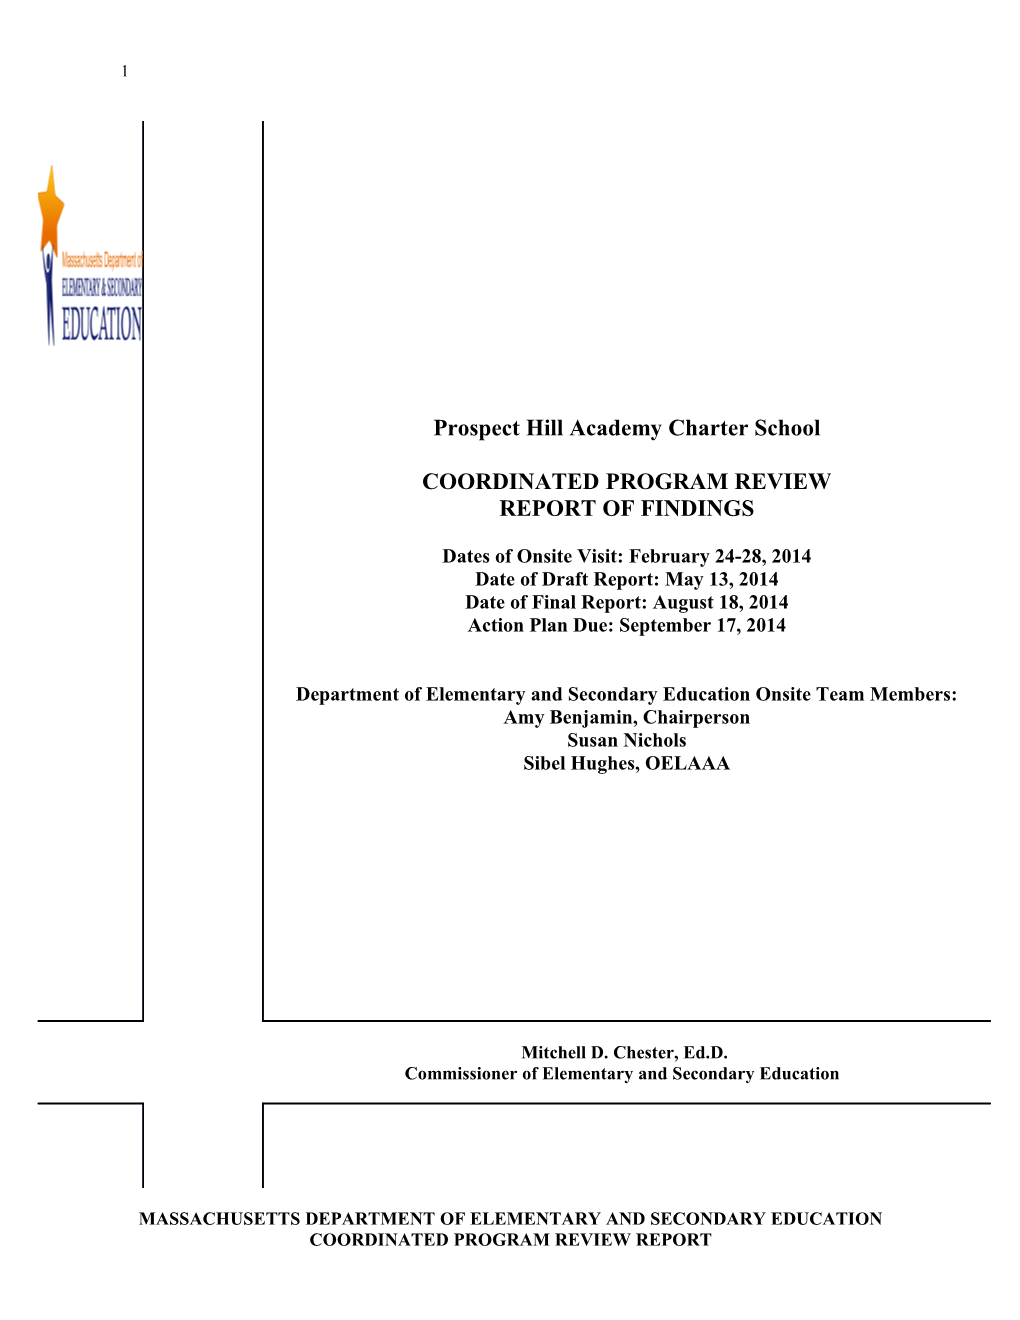 Prospect Hill Academy Charter School CPR Final Report 2014